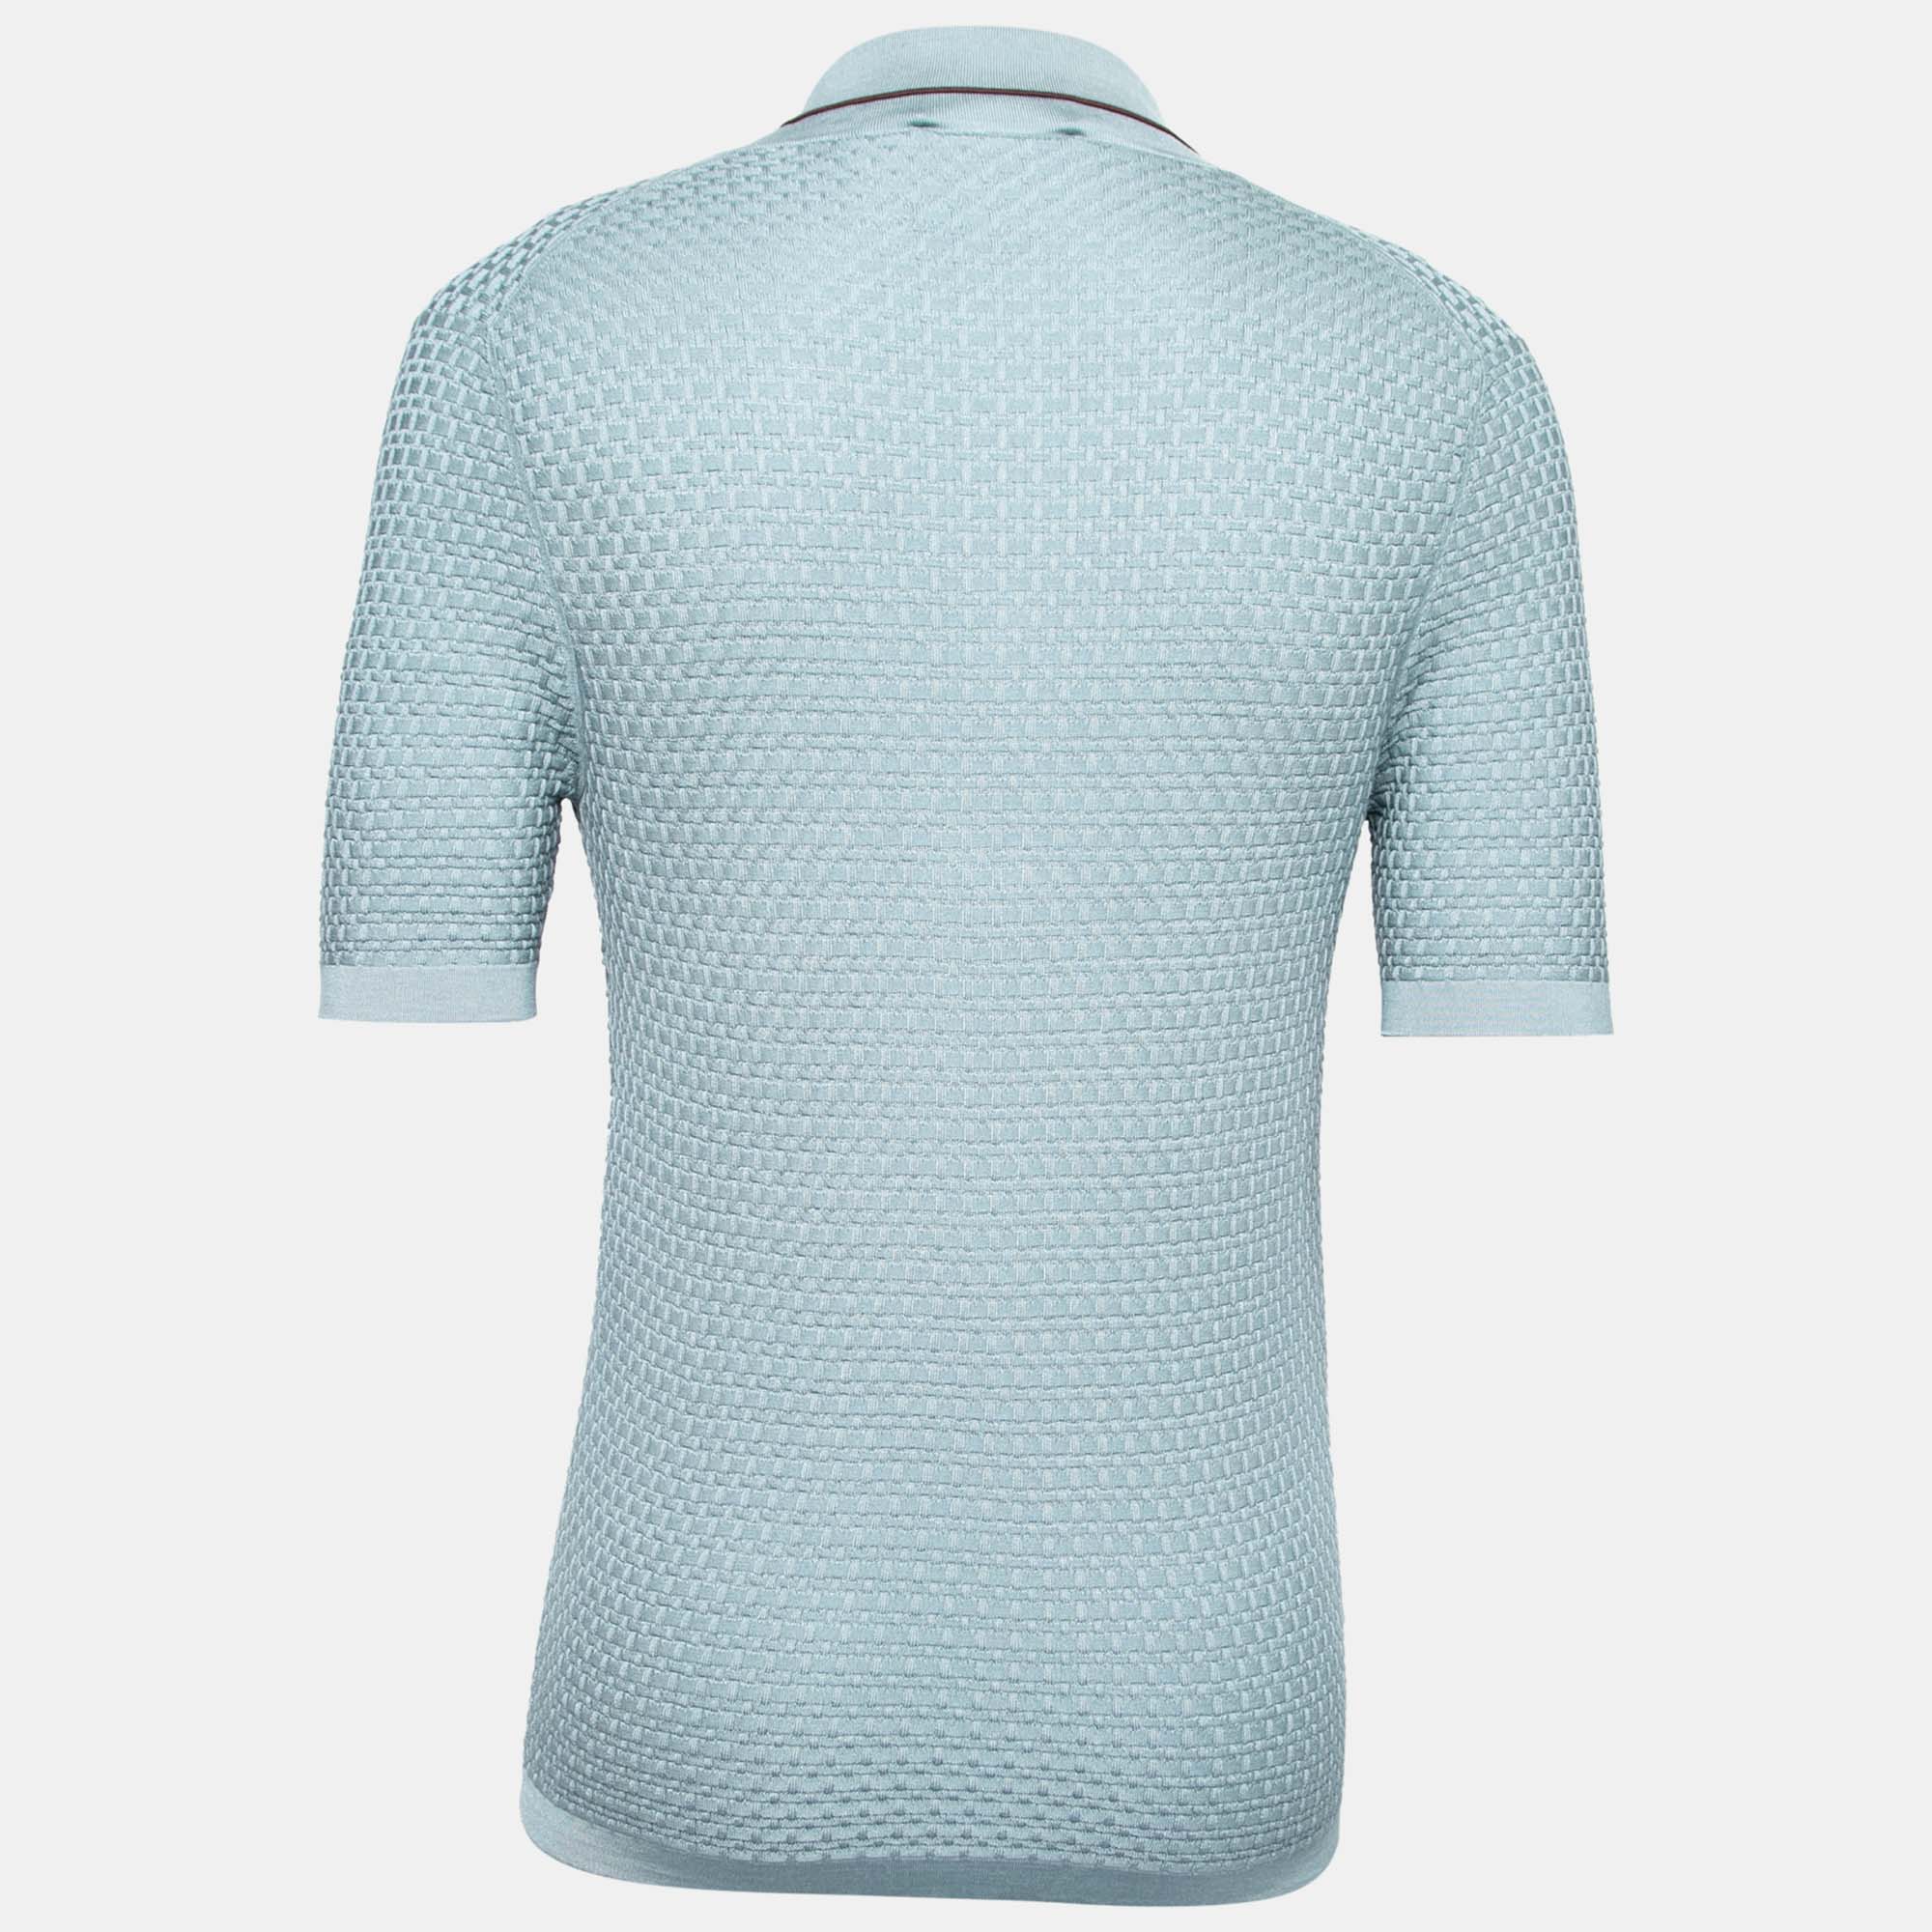 

Salvatore Ferragamo Blue Patterned Silk Knit Short Sleeve Polo T-Shirt